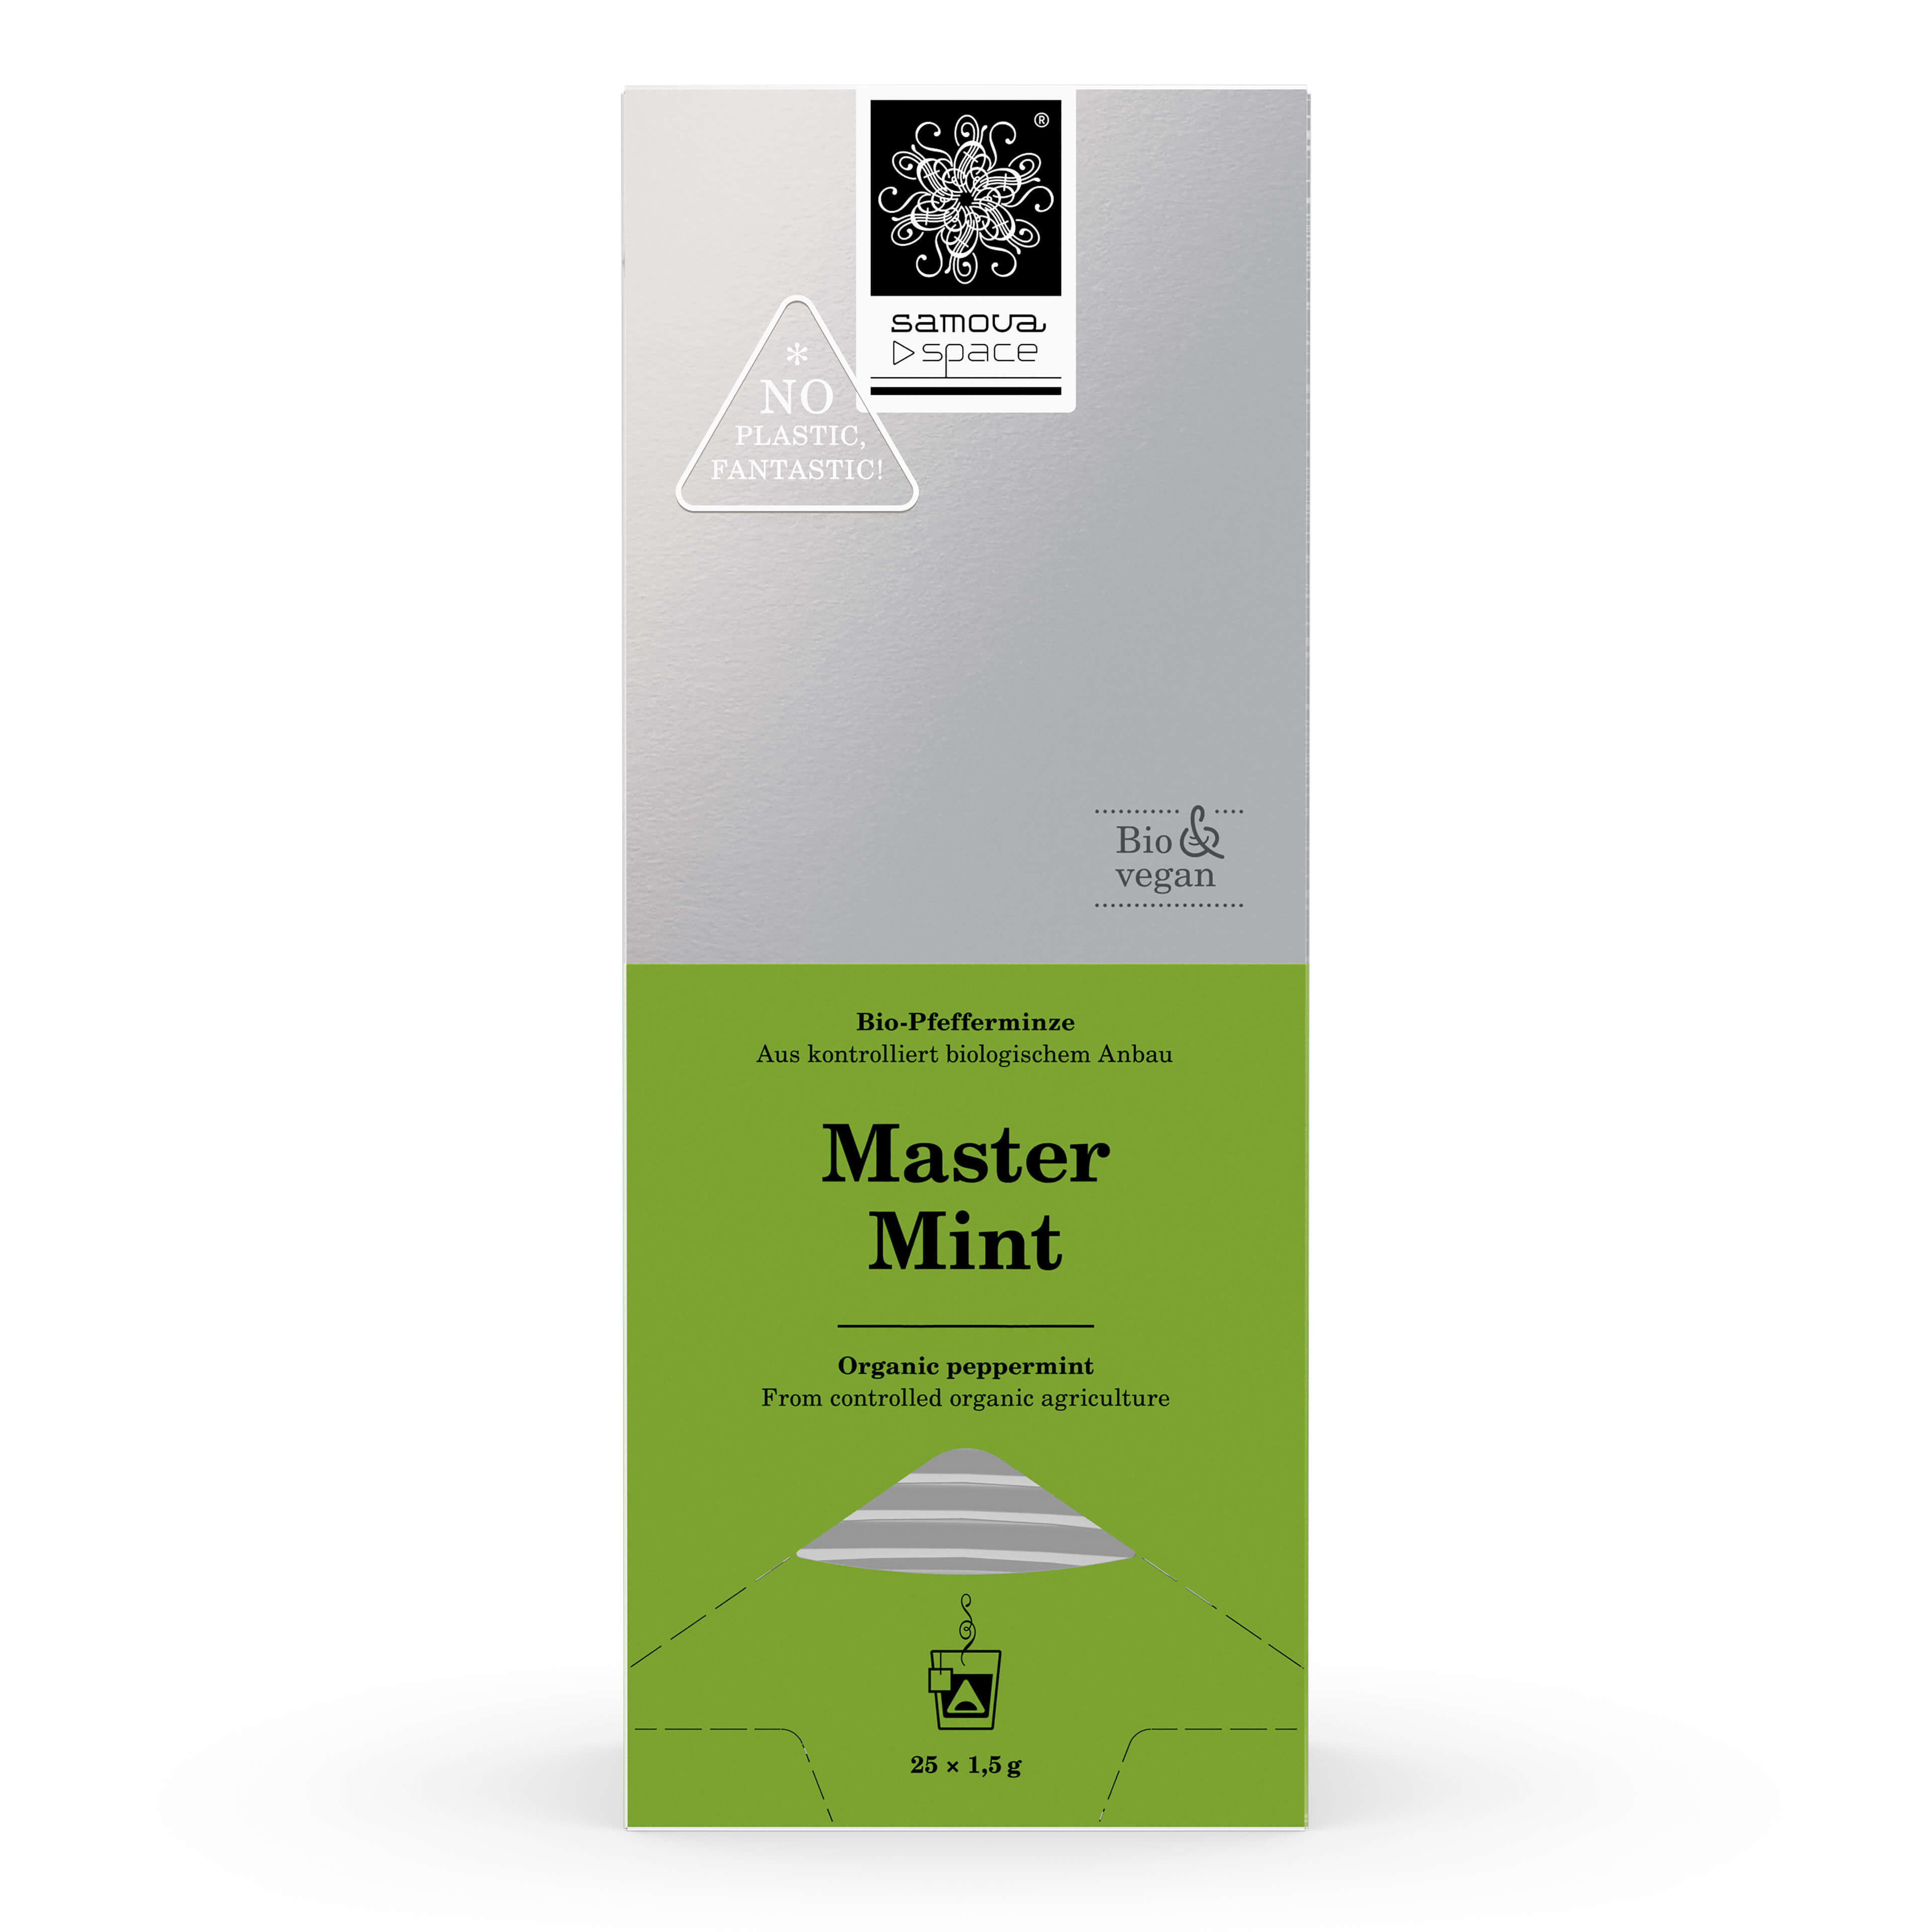 Colección Master Mint